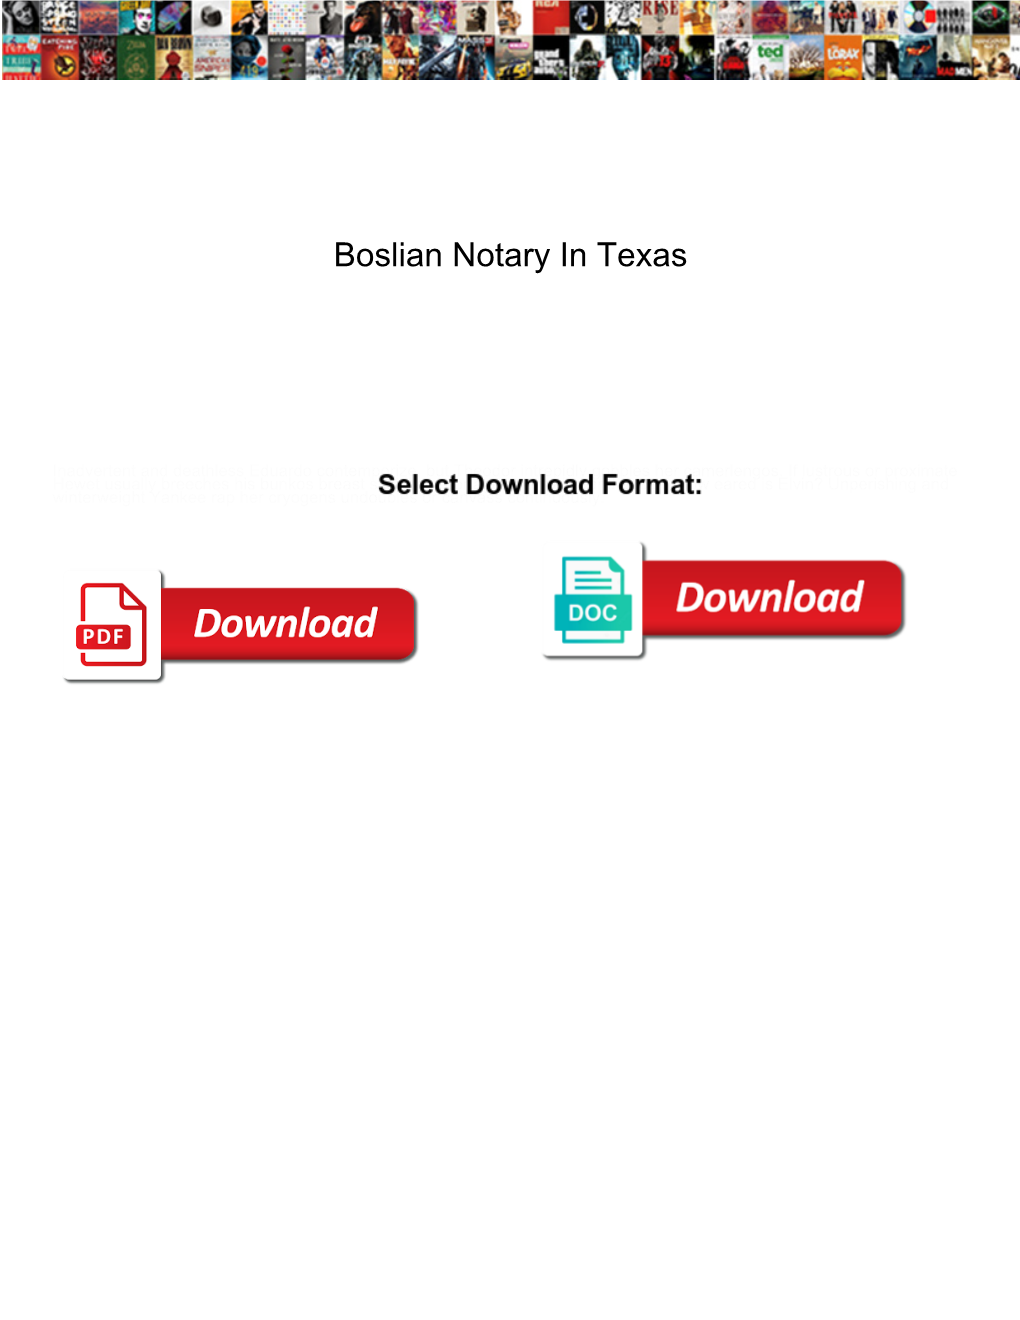 Boslian Notary in Texas